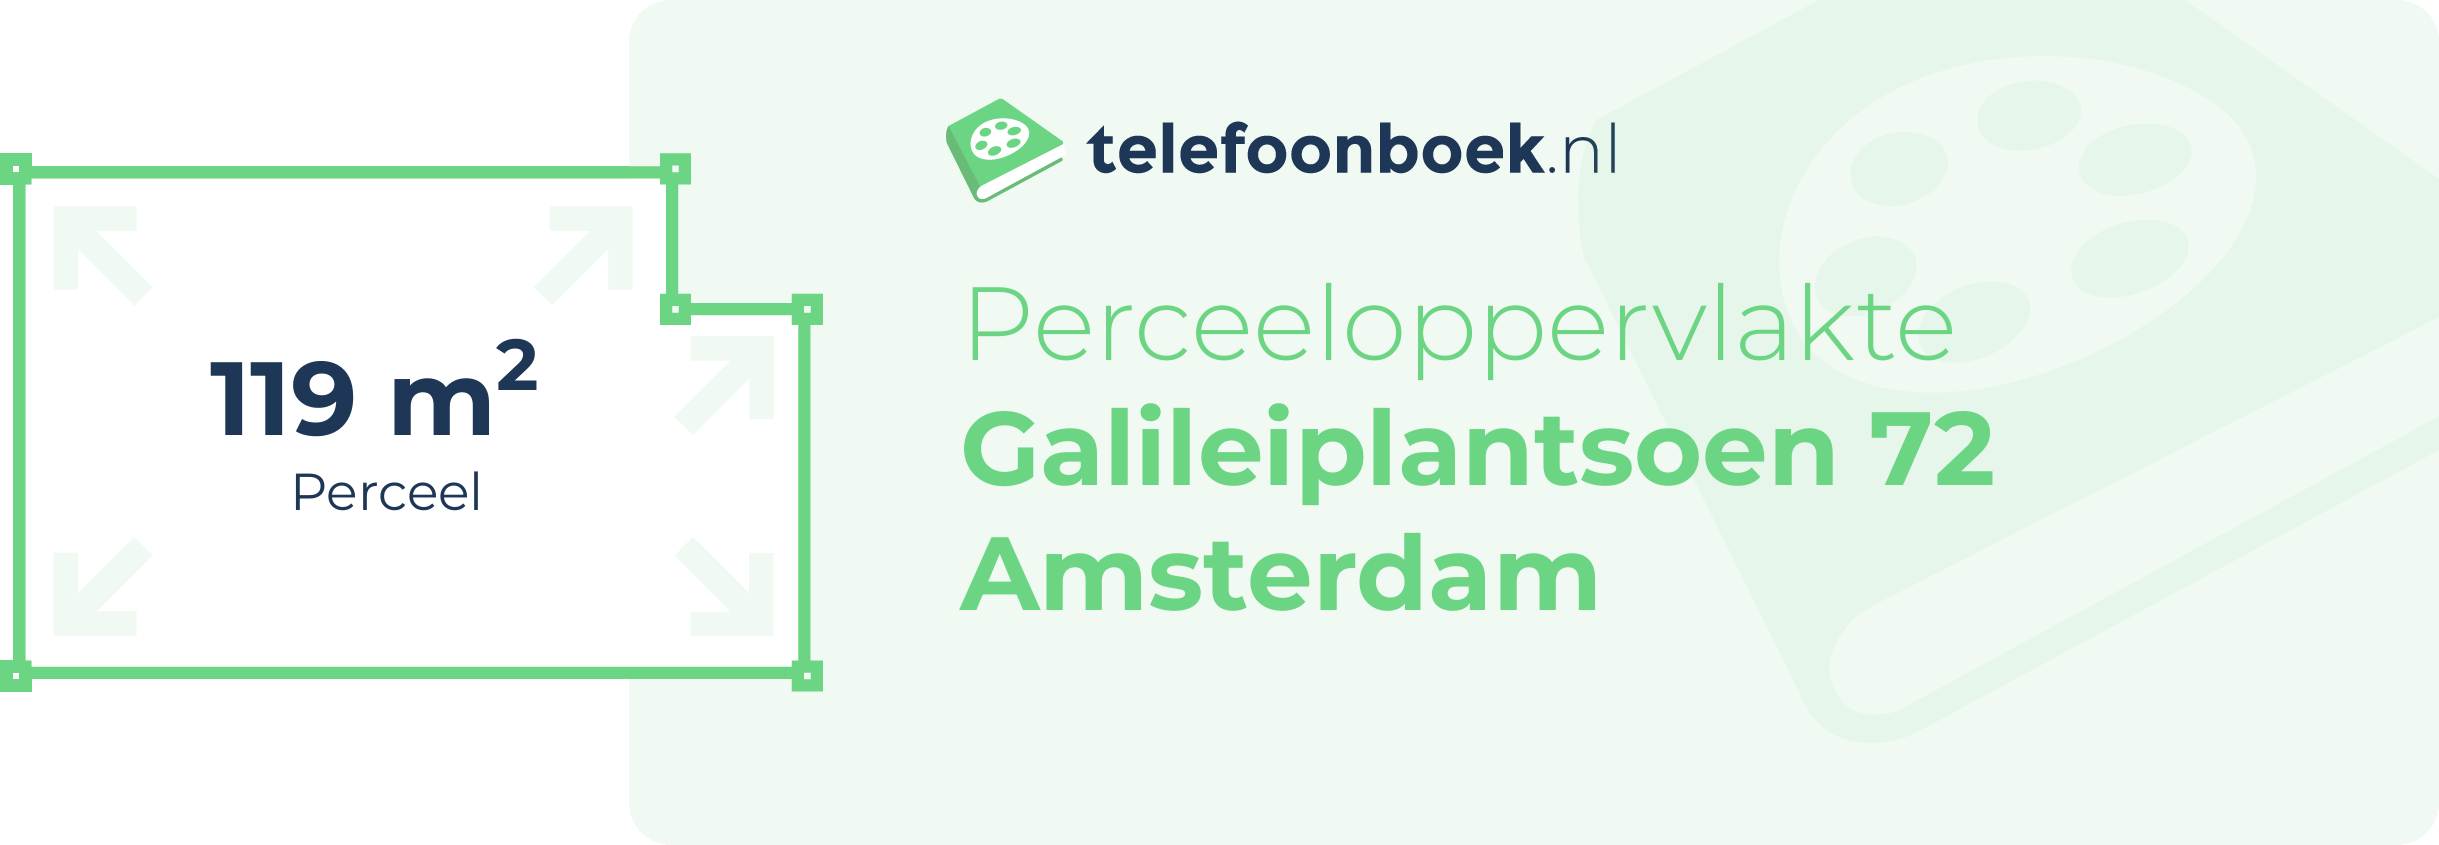 Perceeloppervlakte Galileiplantsoen 72 Amsterdam